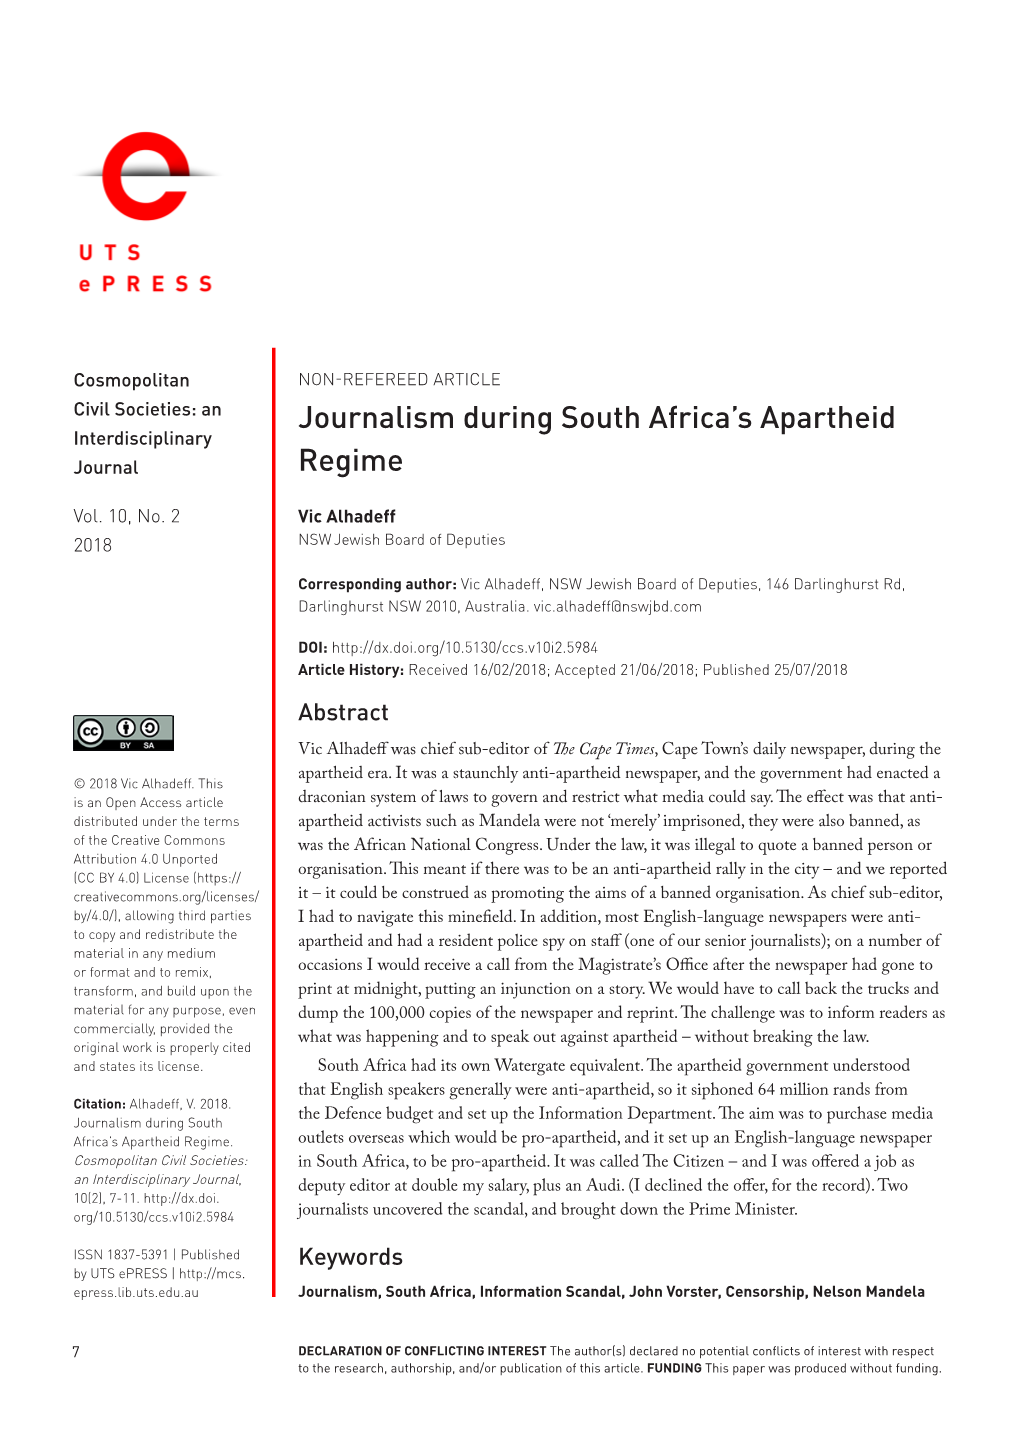 Journalism During South Africa's Apartheid Regime